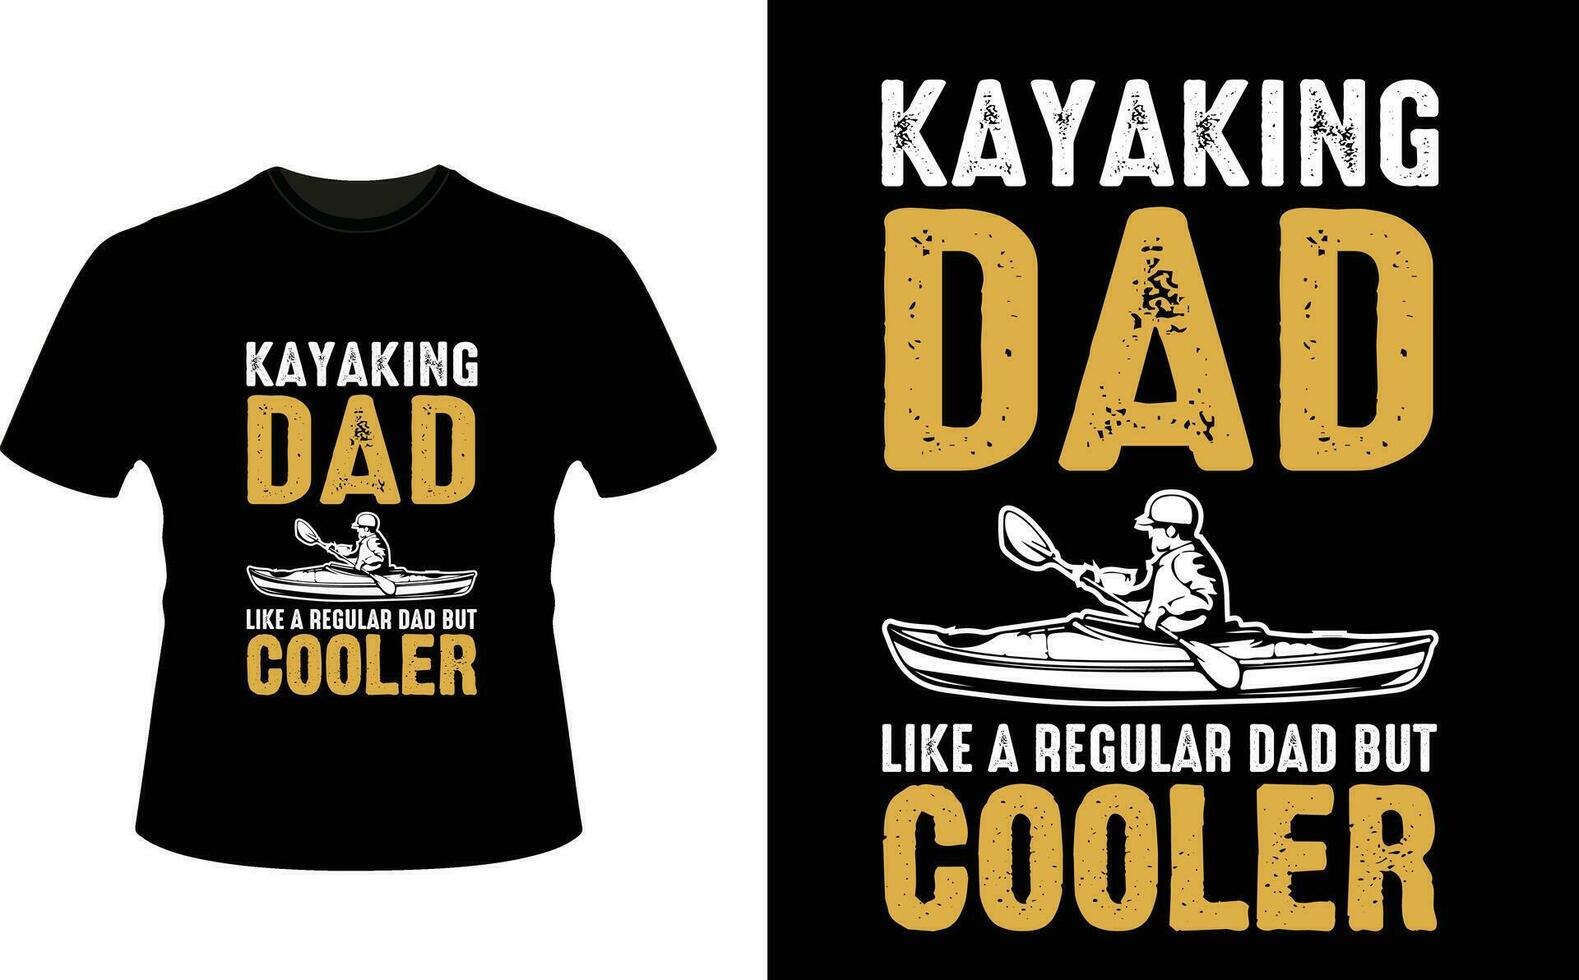 Kajak fahren Papa mögen ein regulär Papa aber Kühler oder Papa Papa T-Shirt Design oder Vater Tag t Hemd Design vektor